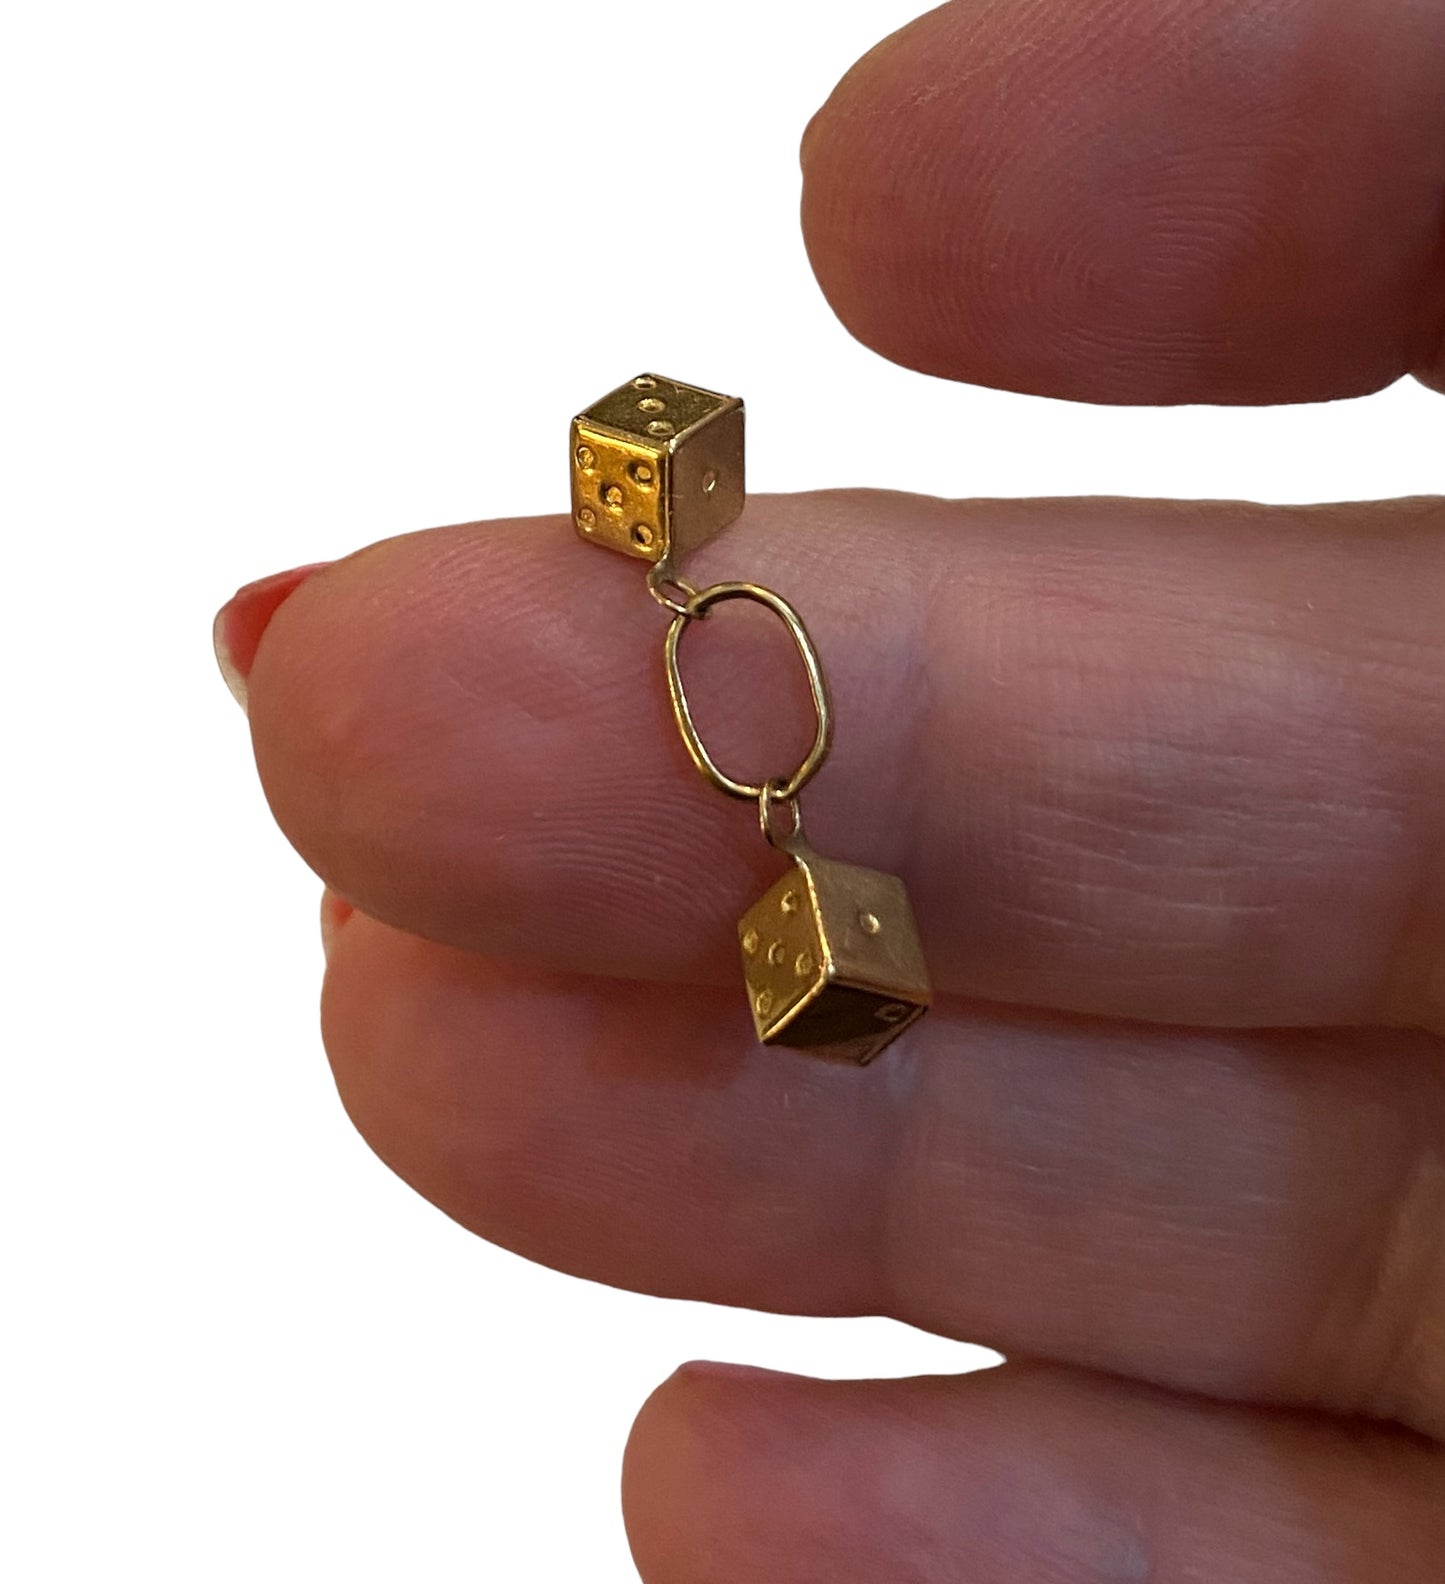 9ct second hand pair of tiny dice charm / pendant